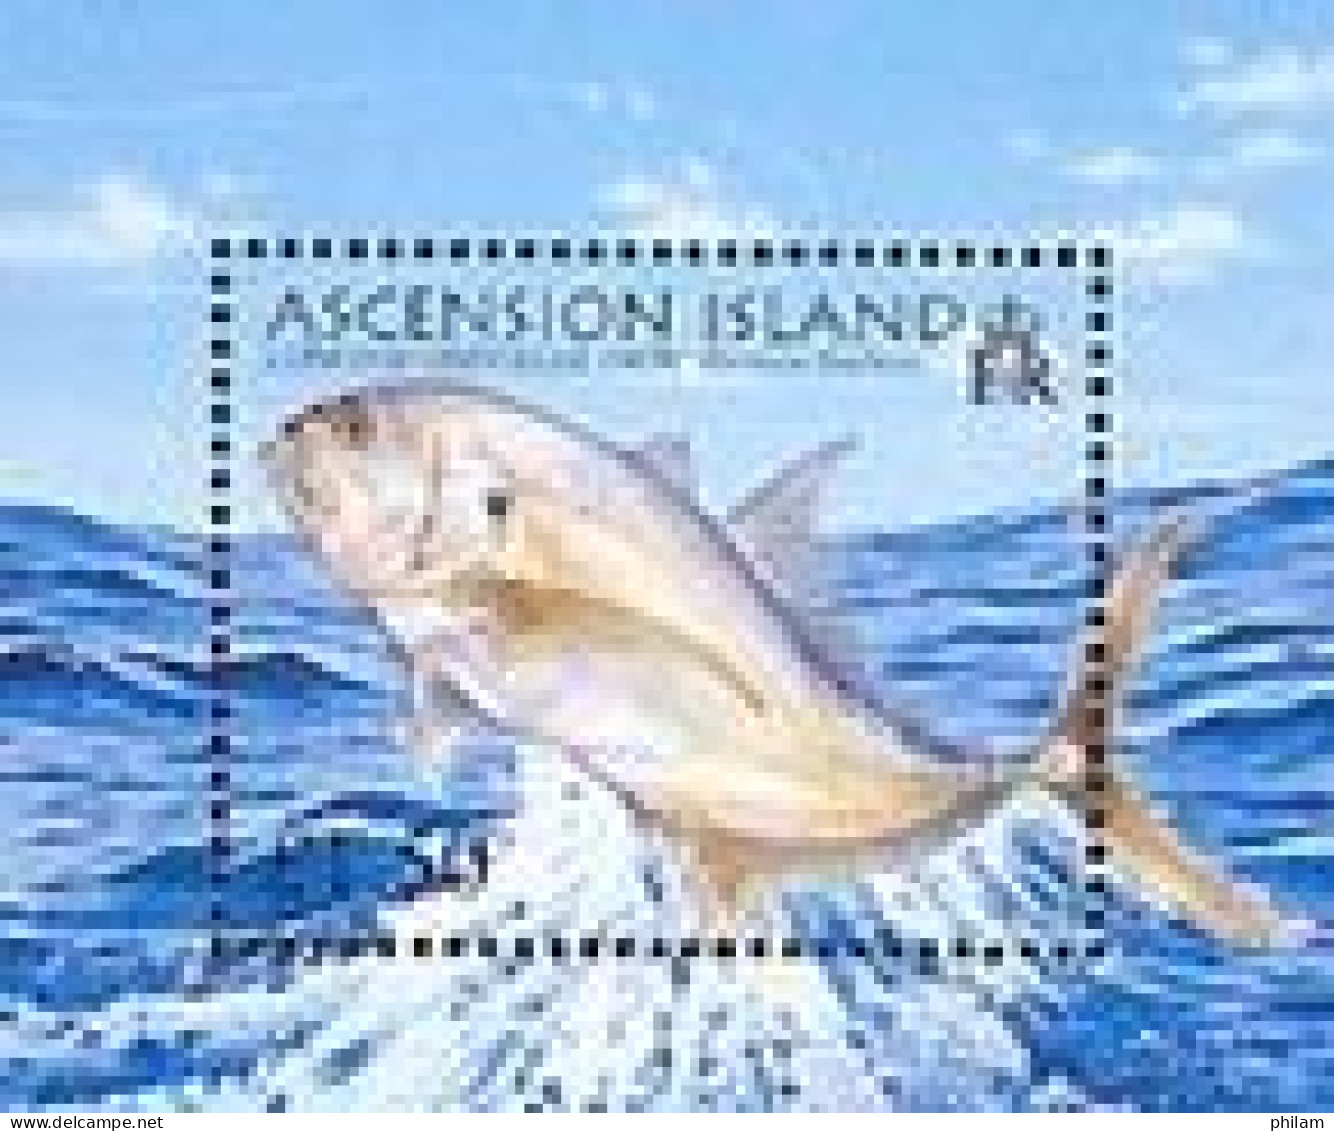 ASCENSION 2006 - Poisson Longfin Crevalle Jack - BF - Ascension